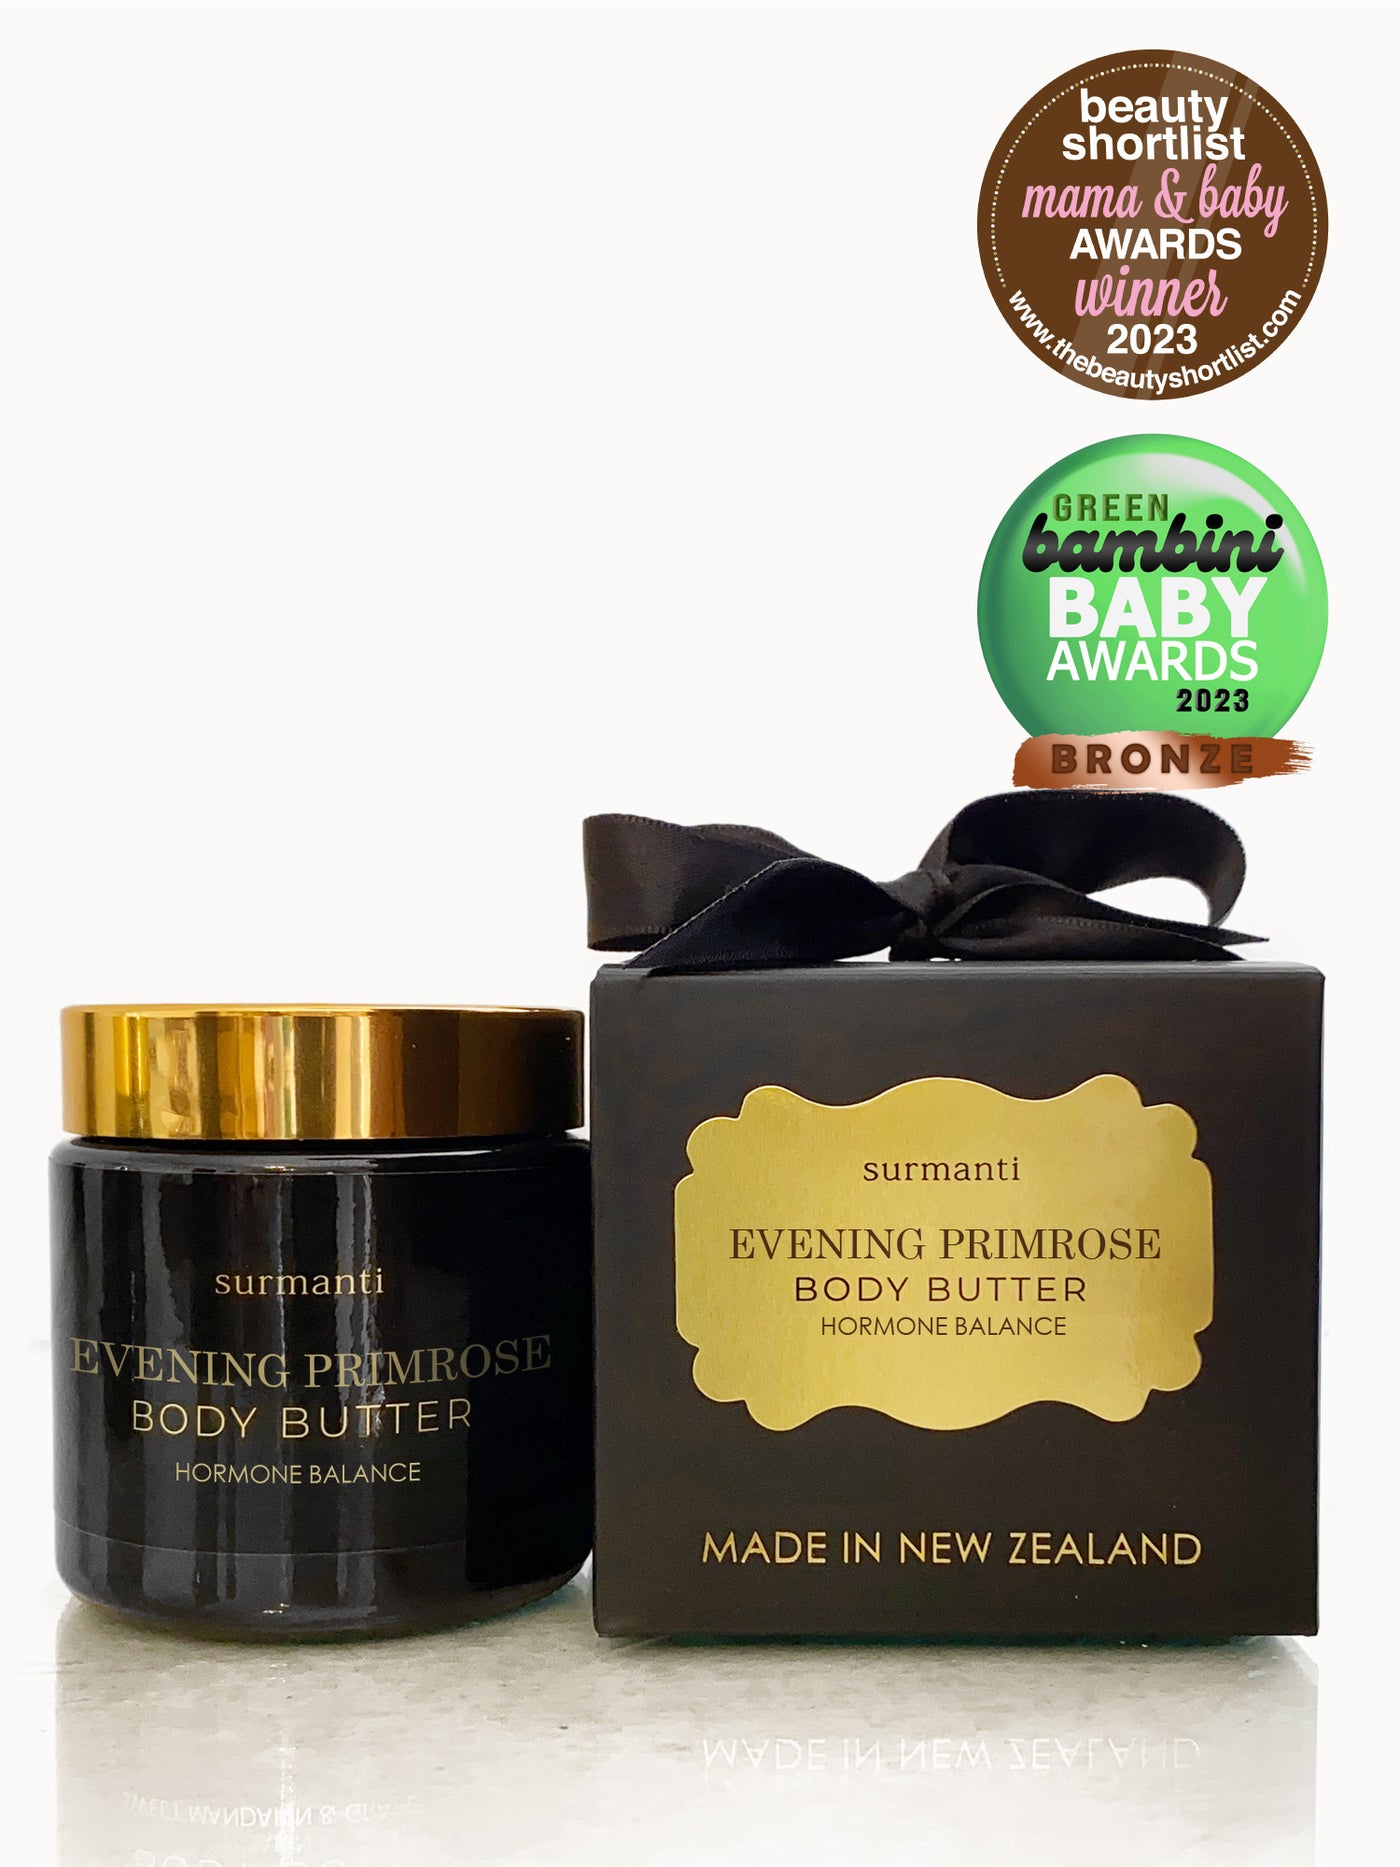 Evening Primrose Hormone Balance Body Butter - Surmanti - Made In New Zealand